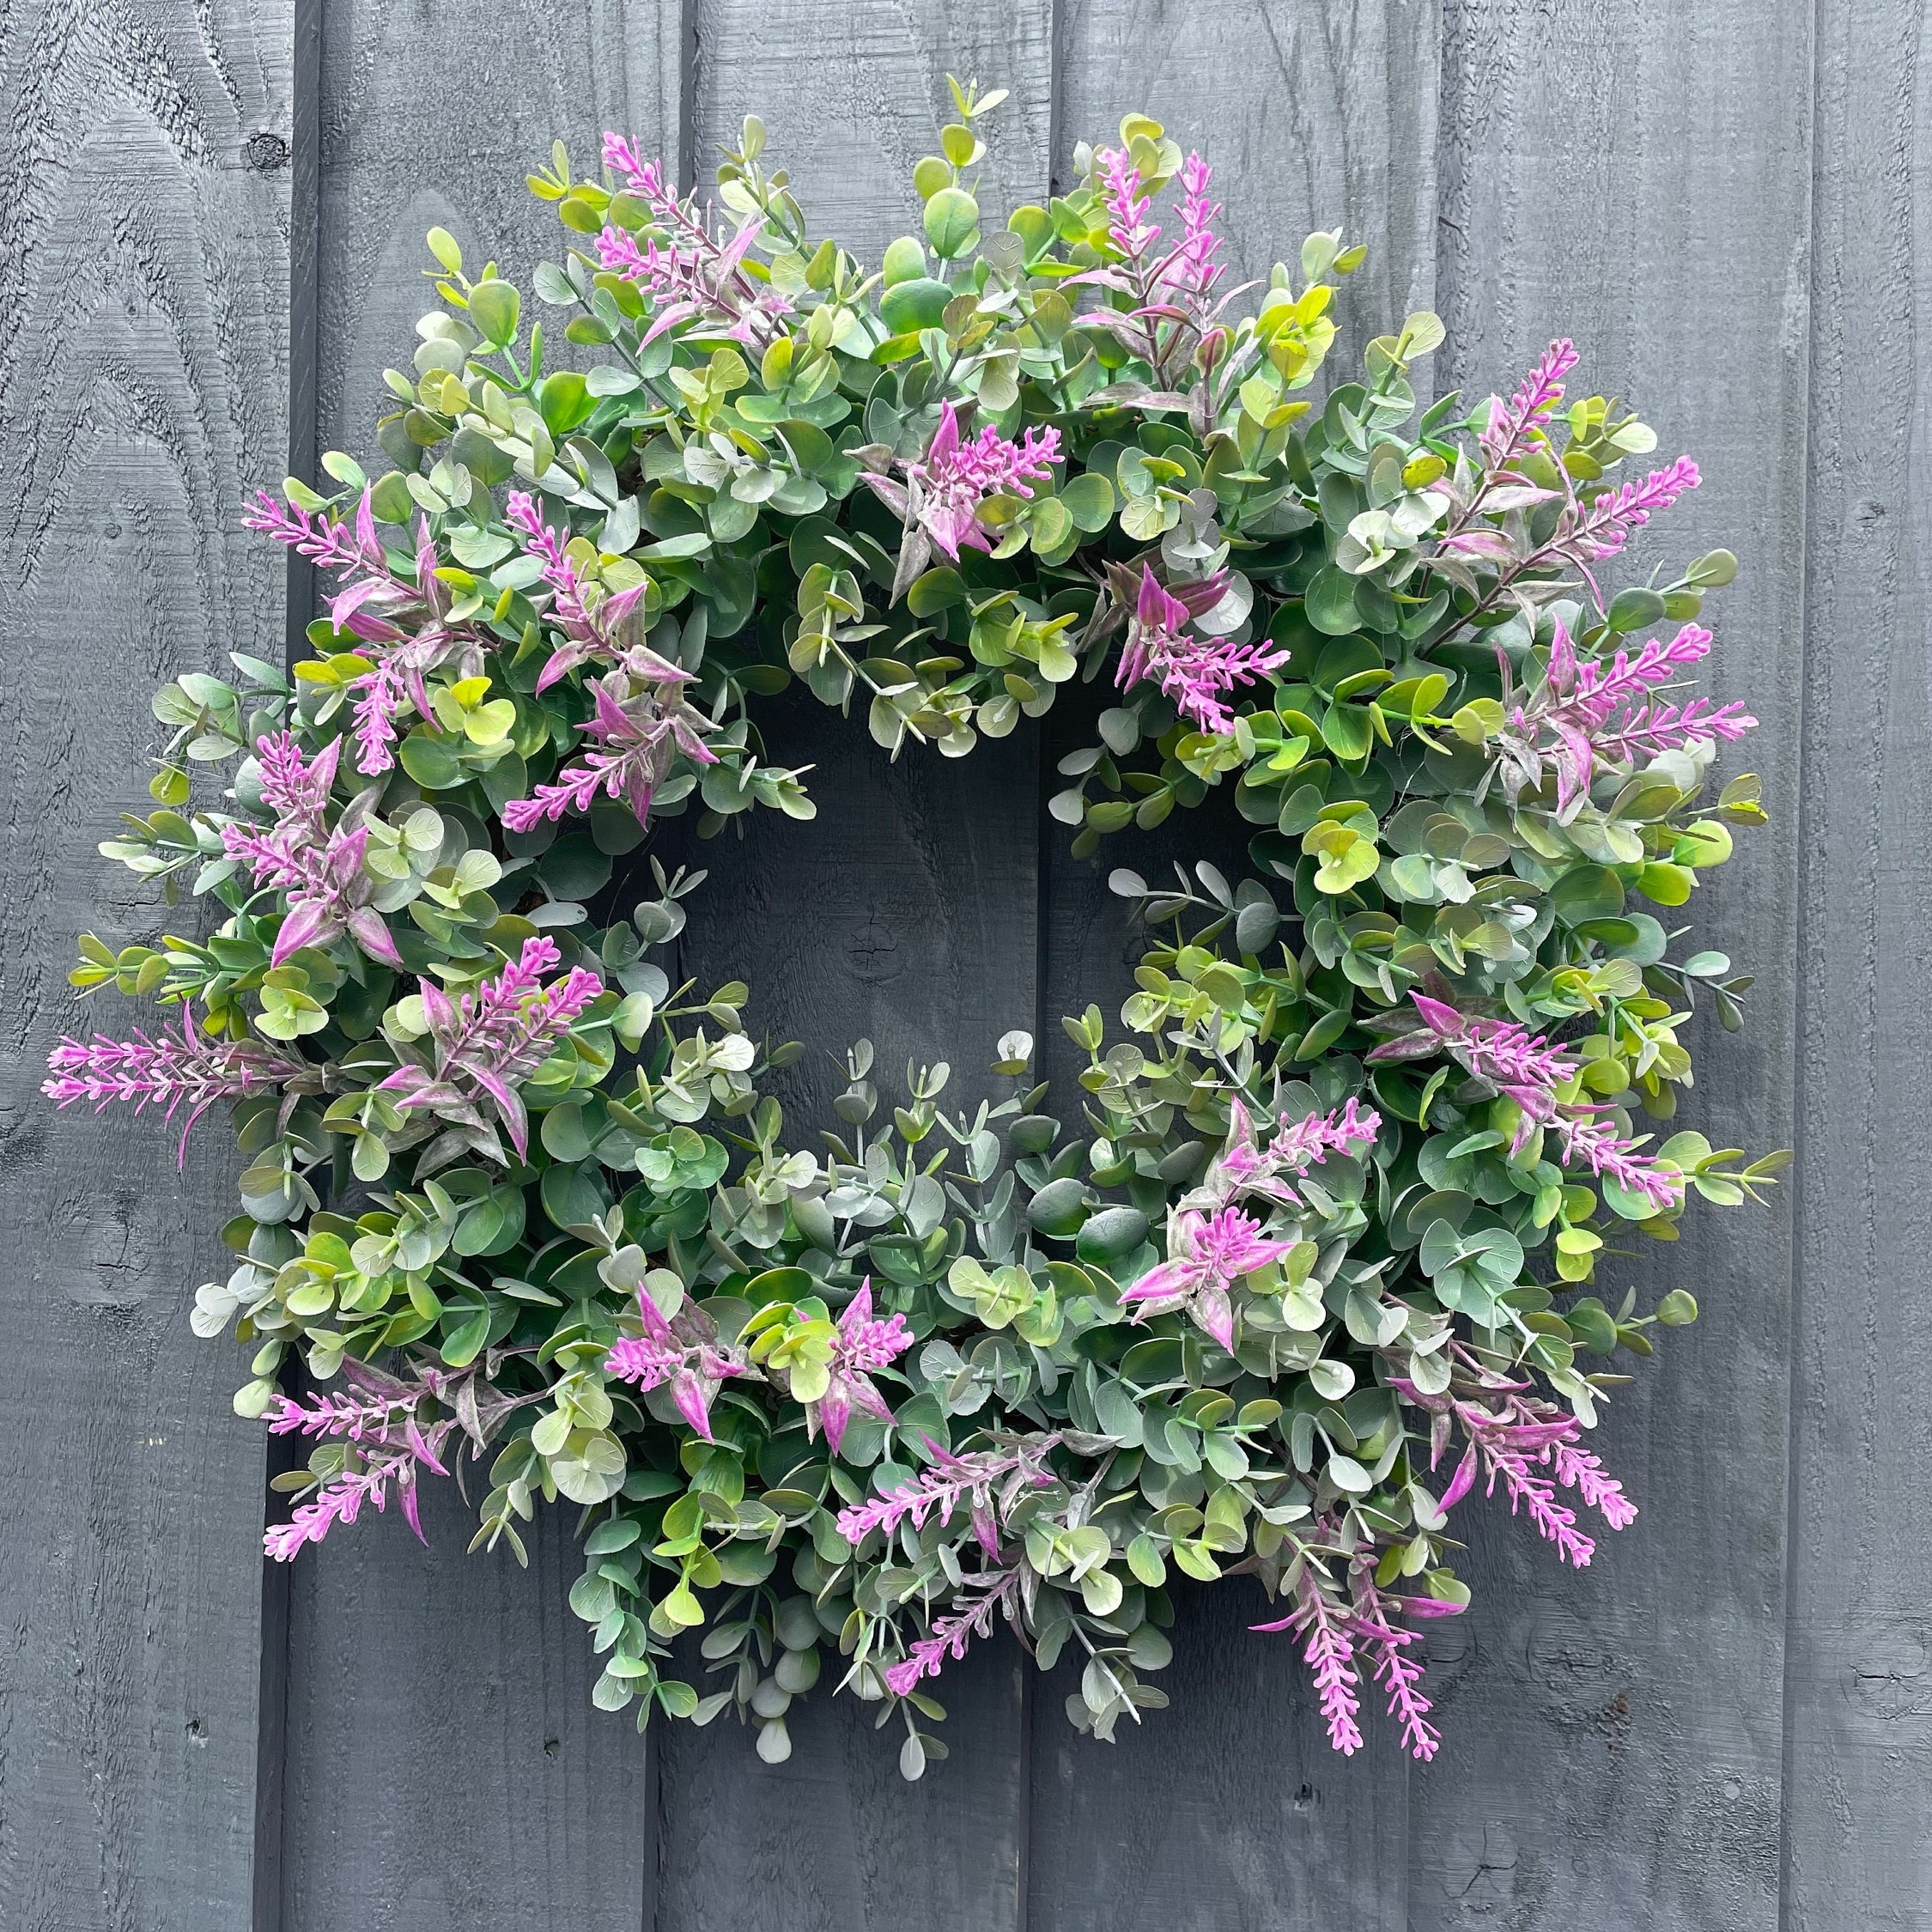 Wreath - Year Round Wreath - Everyday Wreath - Wreath, Front Door Wreath,  All Year Round Door Wreath, Door Wreath, Wreath with Bow